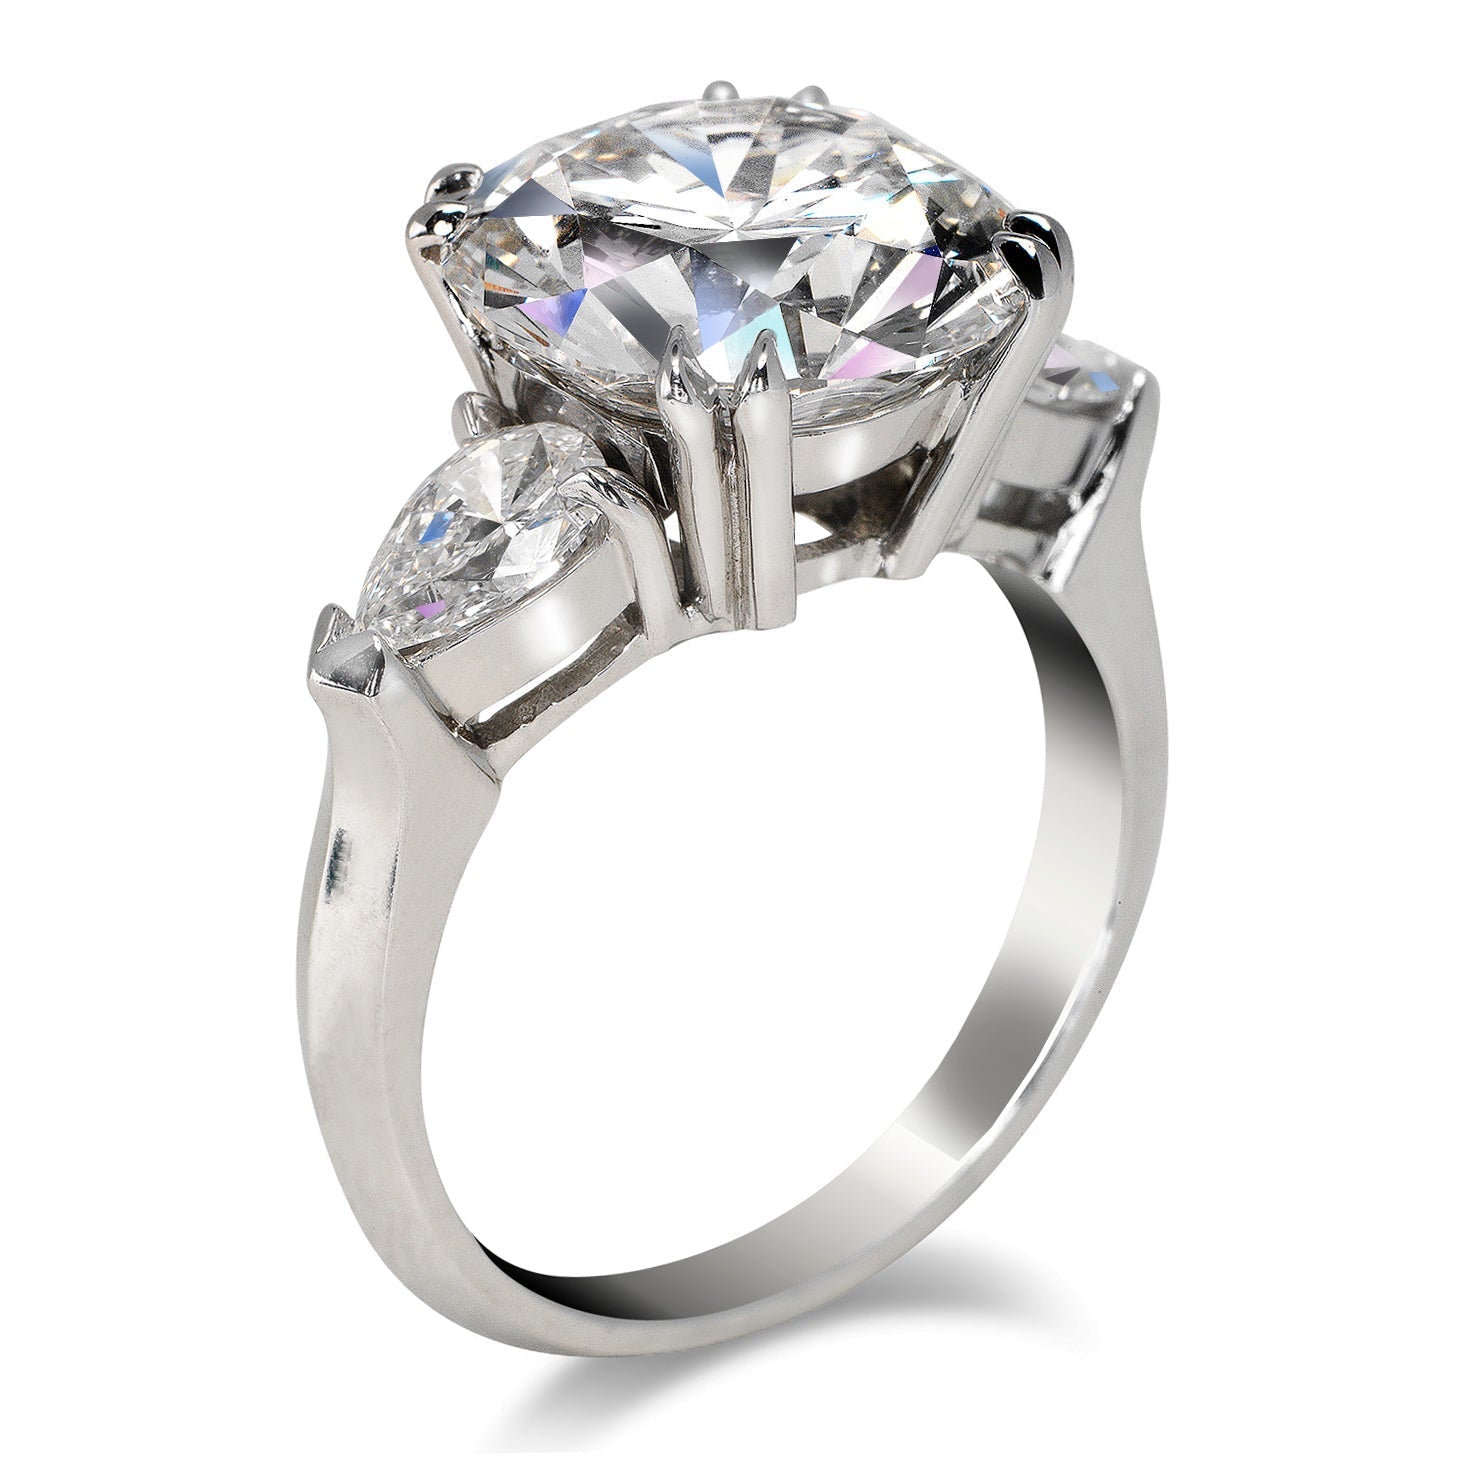 Diamond Ring Round Cut 8 Carat Three Stone Ring in 14K White Gold Side View